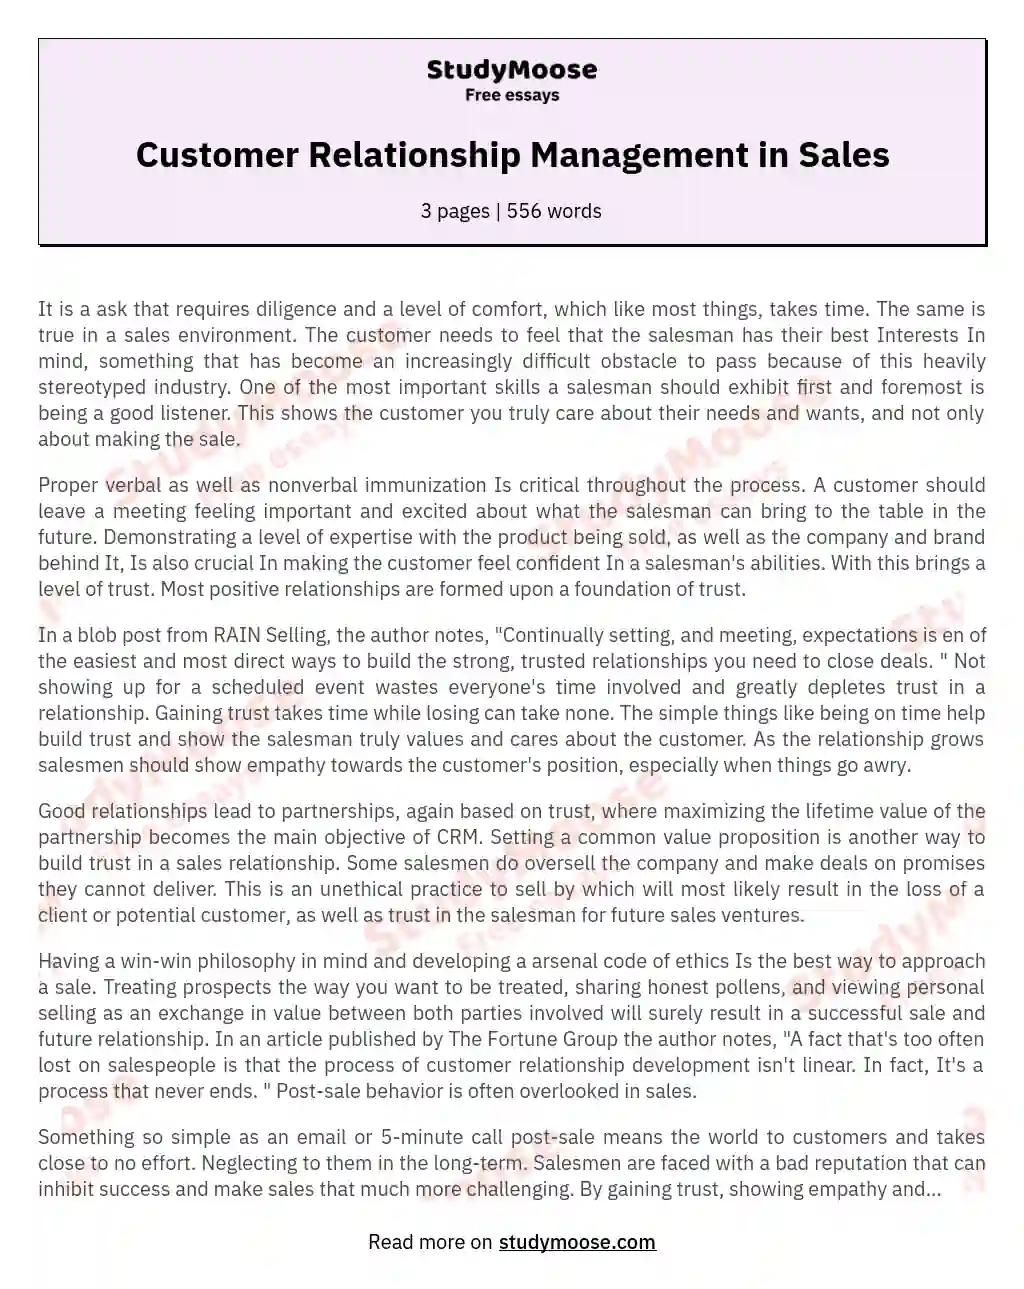 Customer Relationship Management in Sales essay